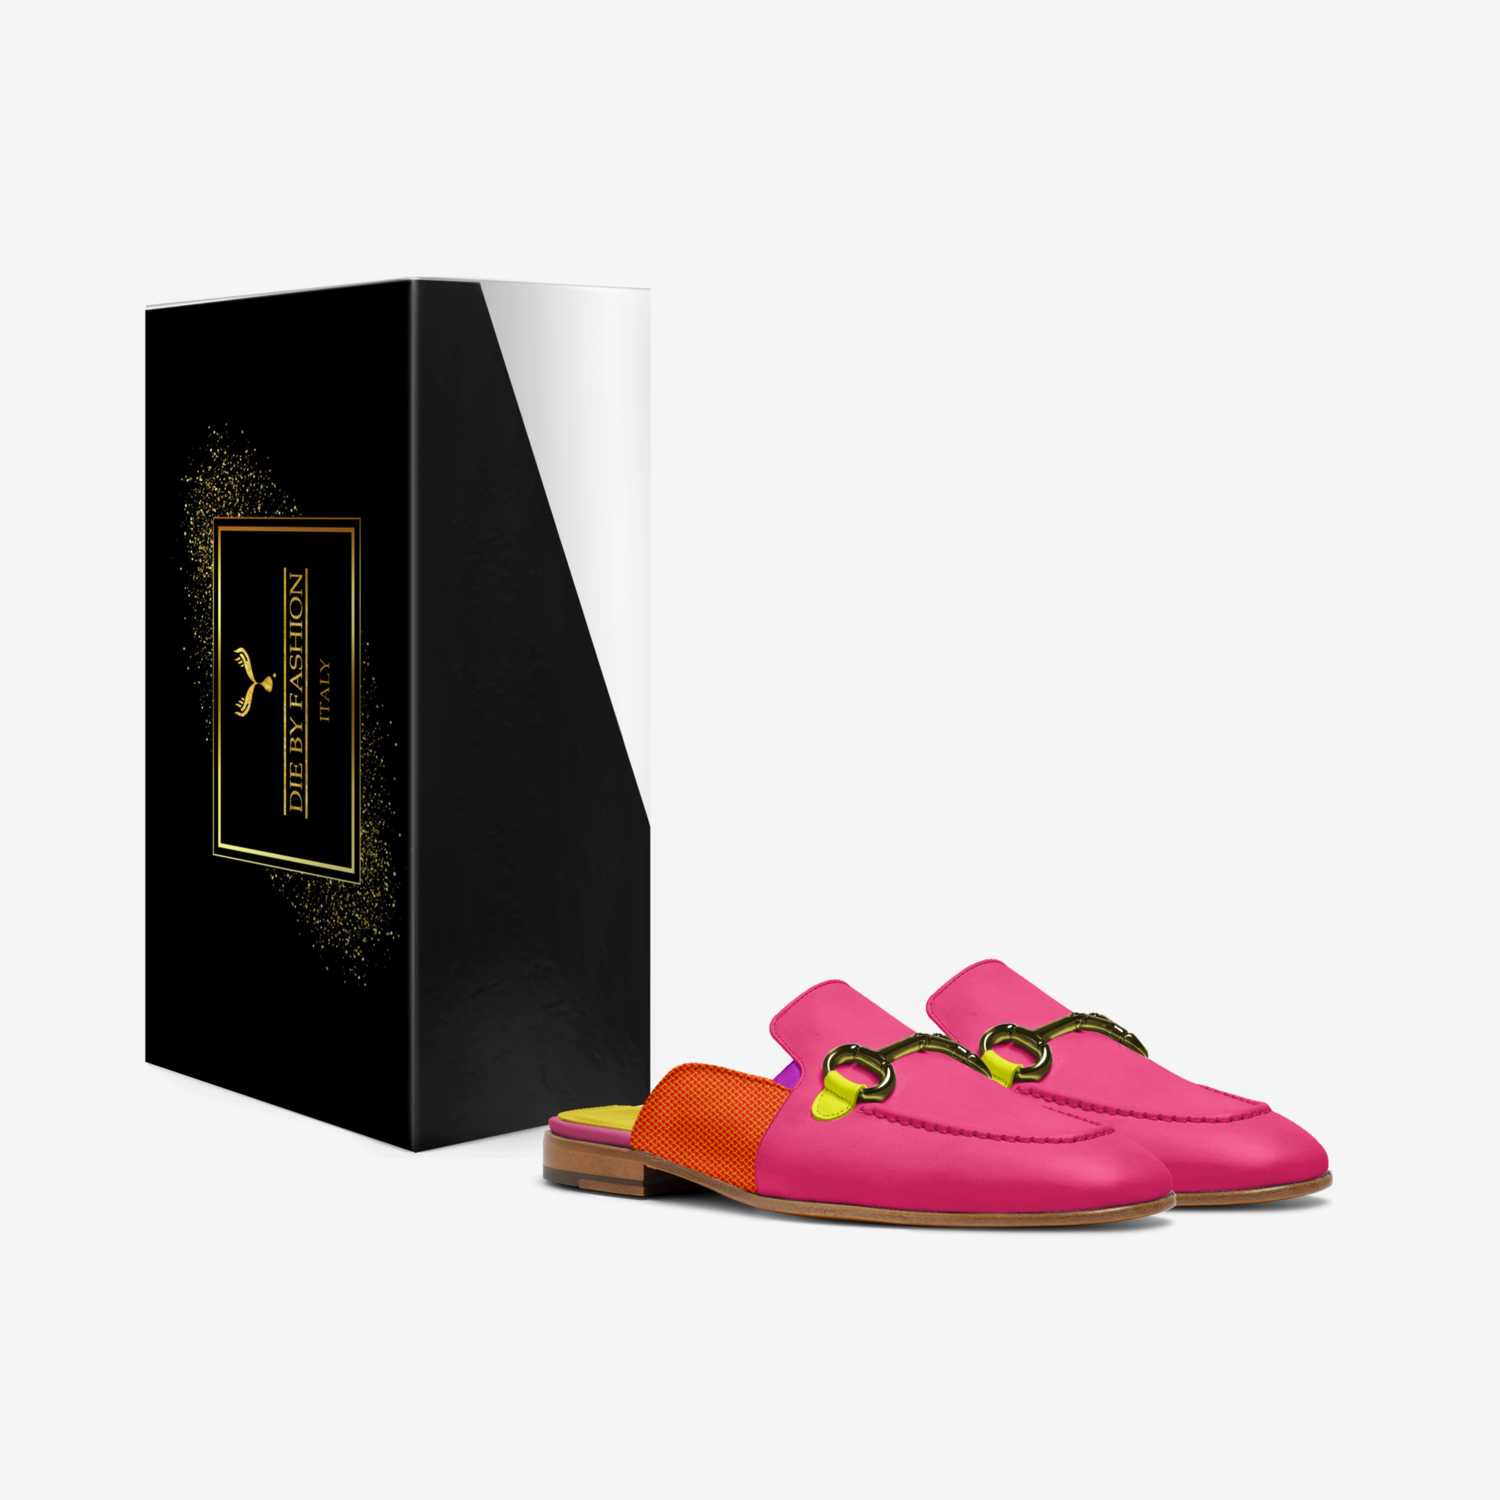 Hot Babes  custom made in Italy shoes by Rasheeda Socolove | Box view